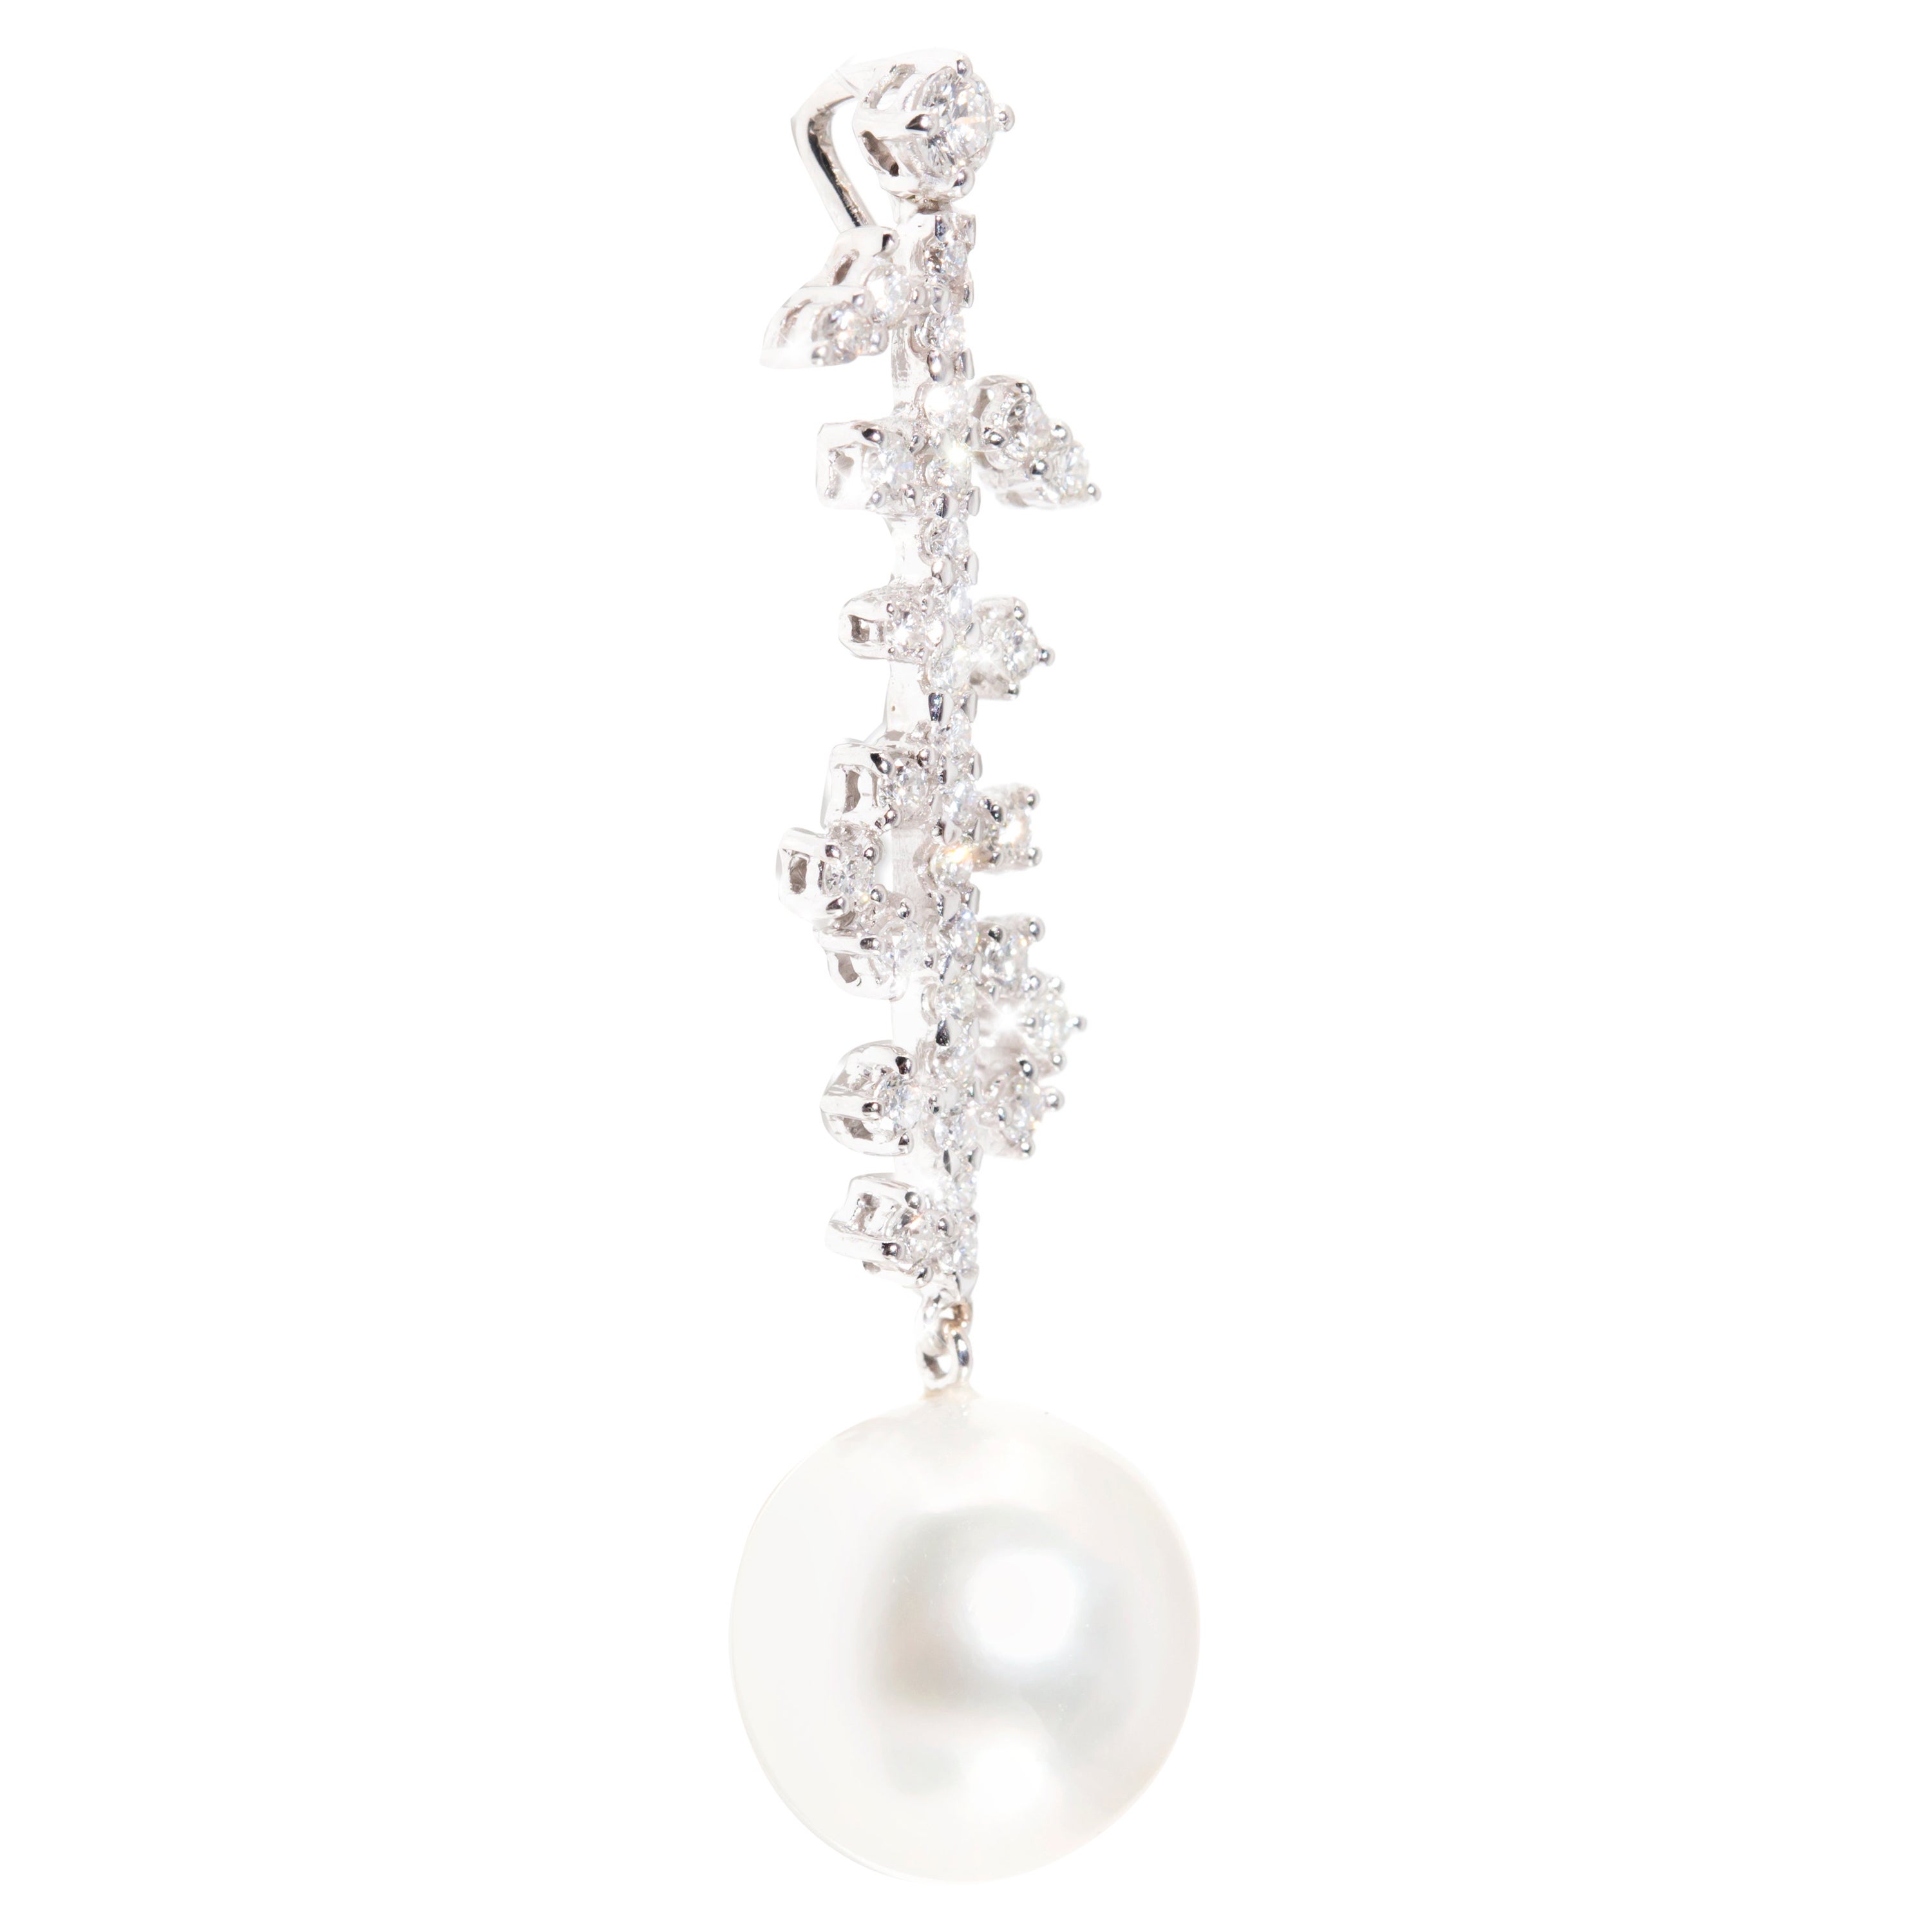 South Sea Pearl and White Diamond Pendant in 18 Carat White Gold